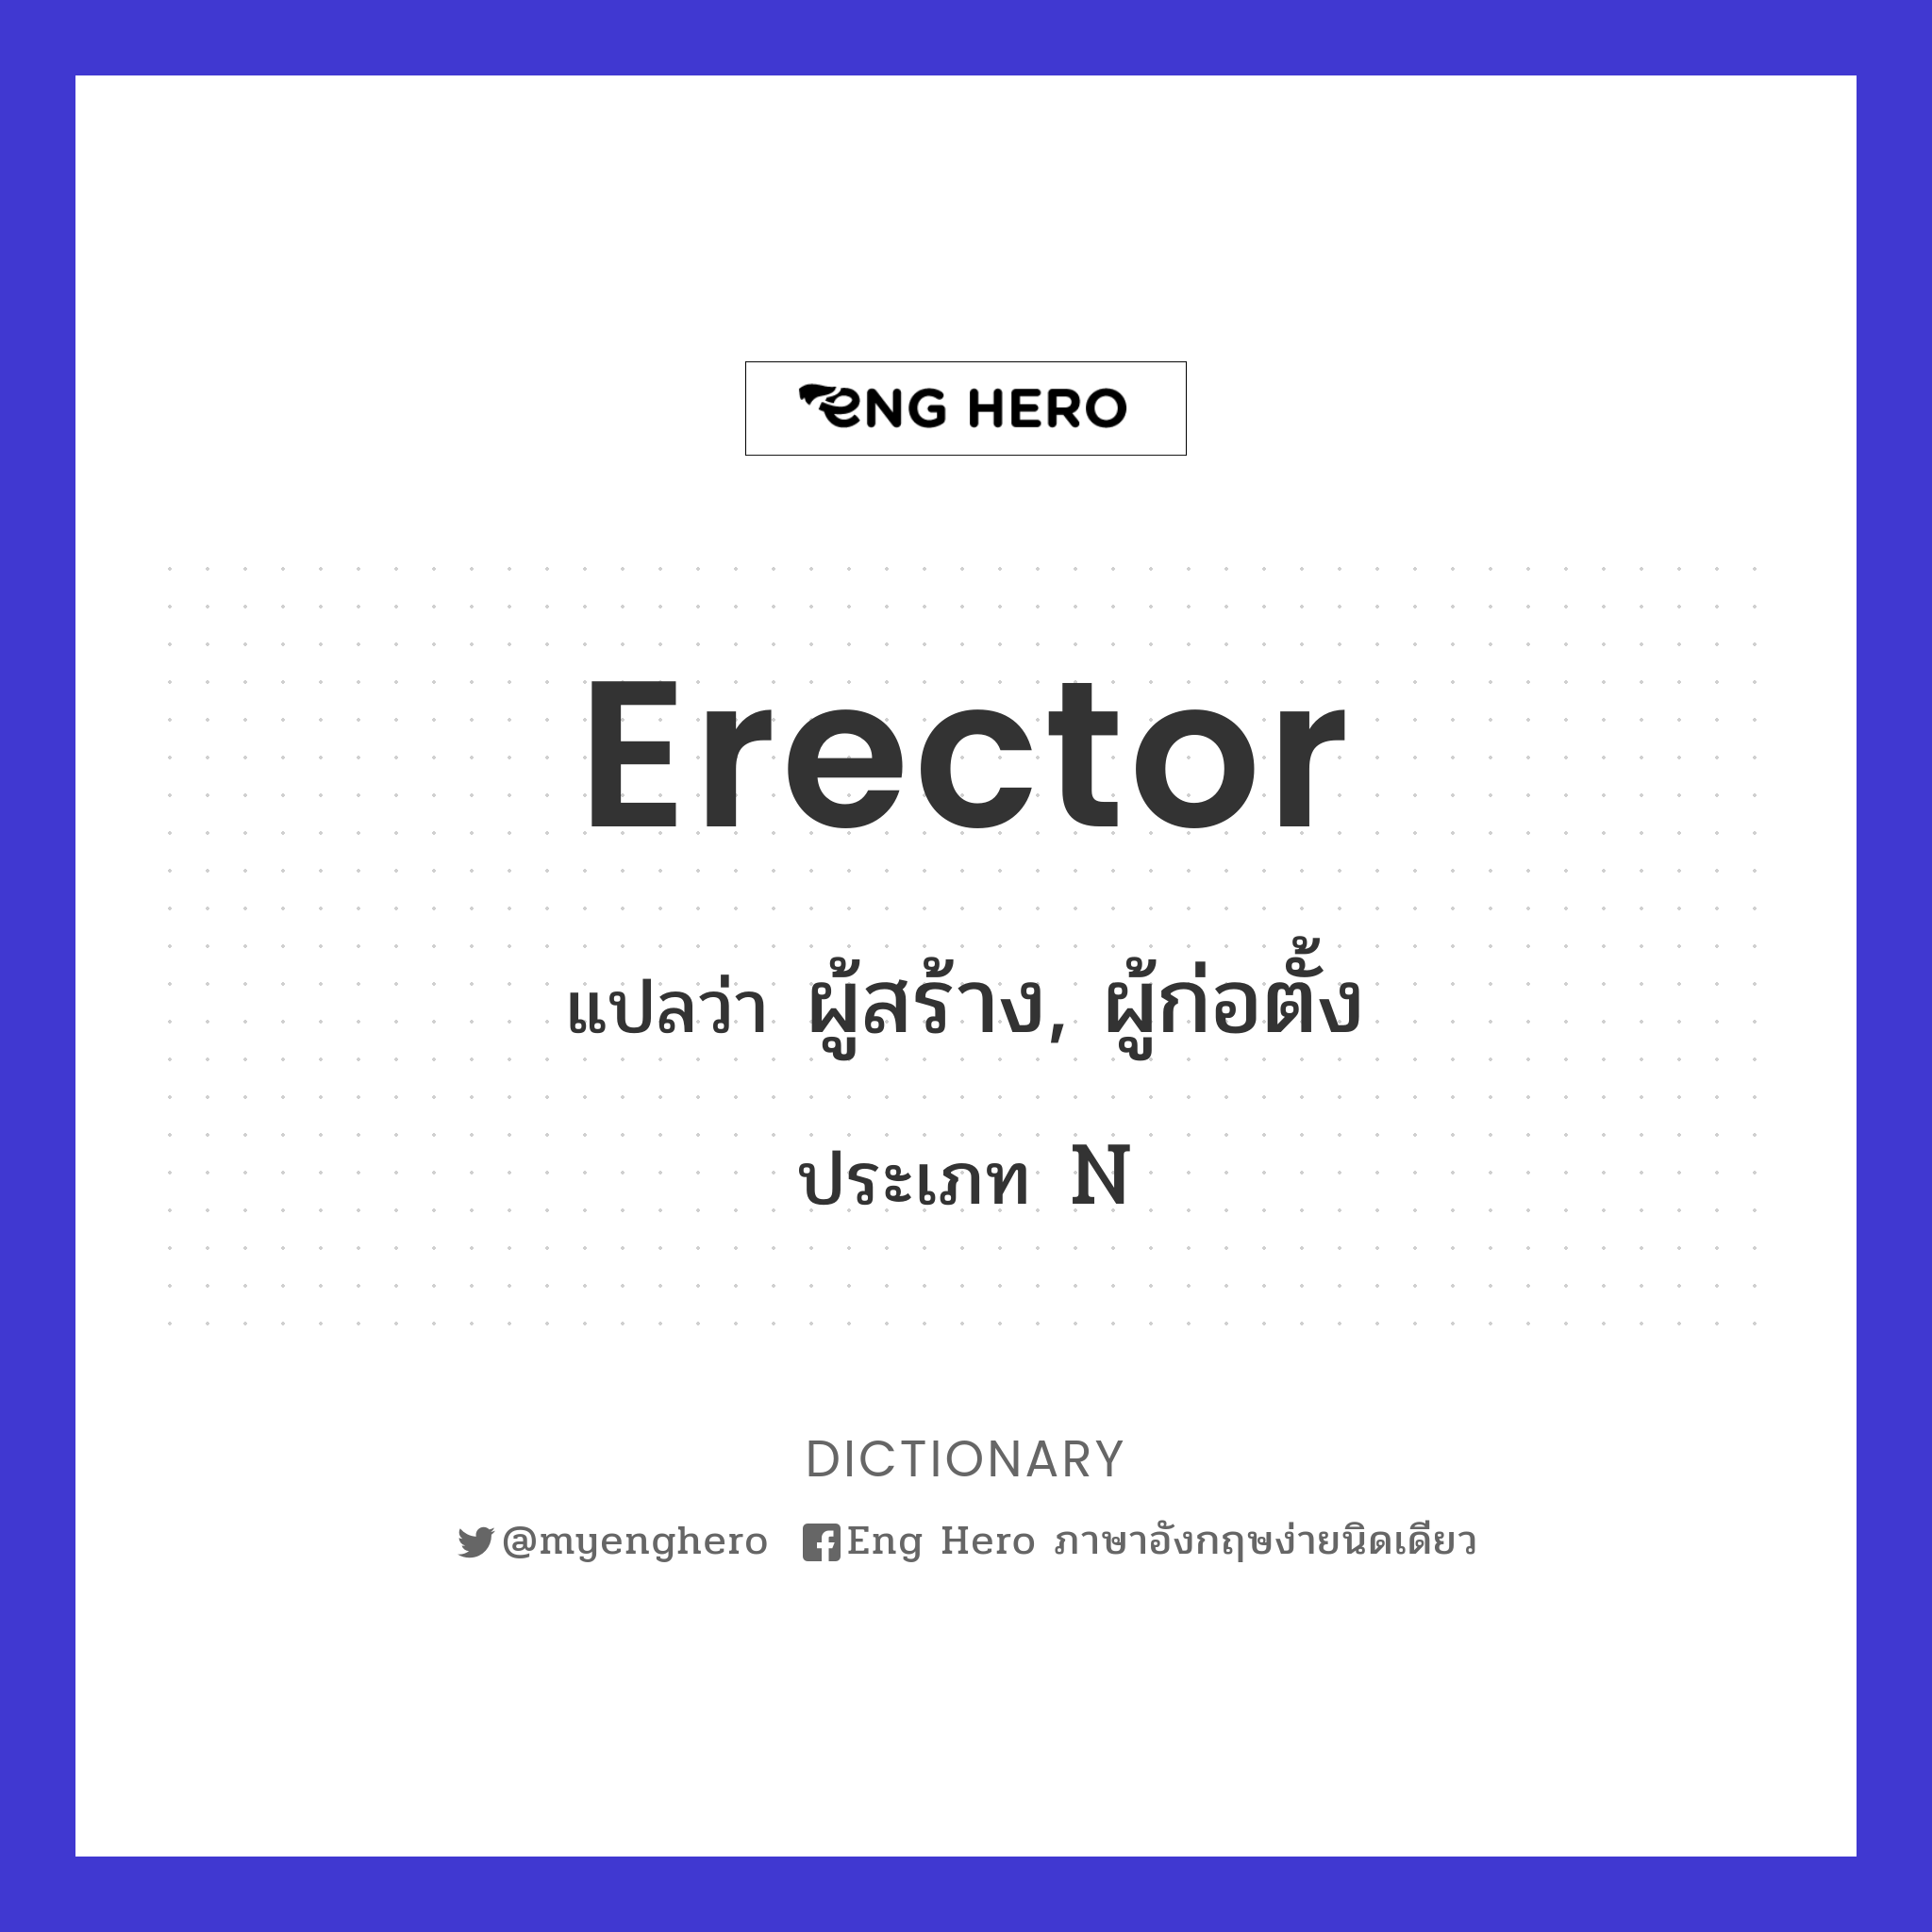 erector